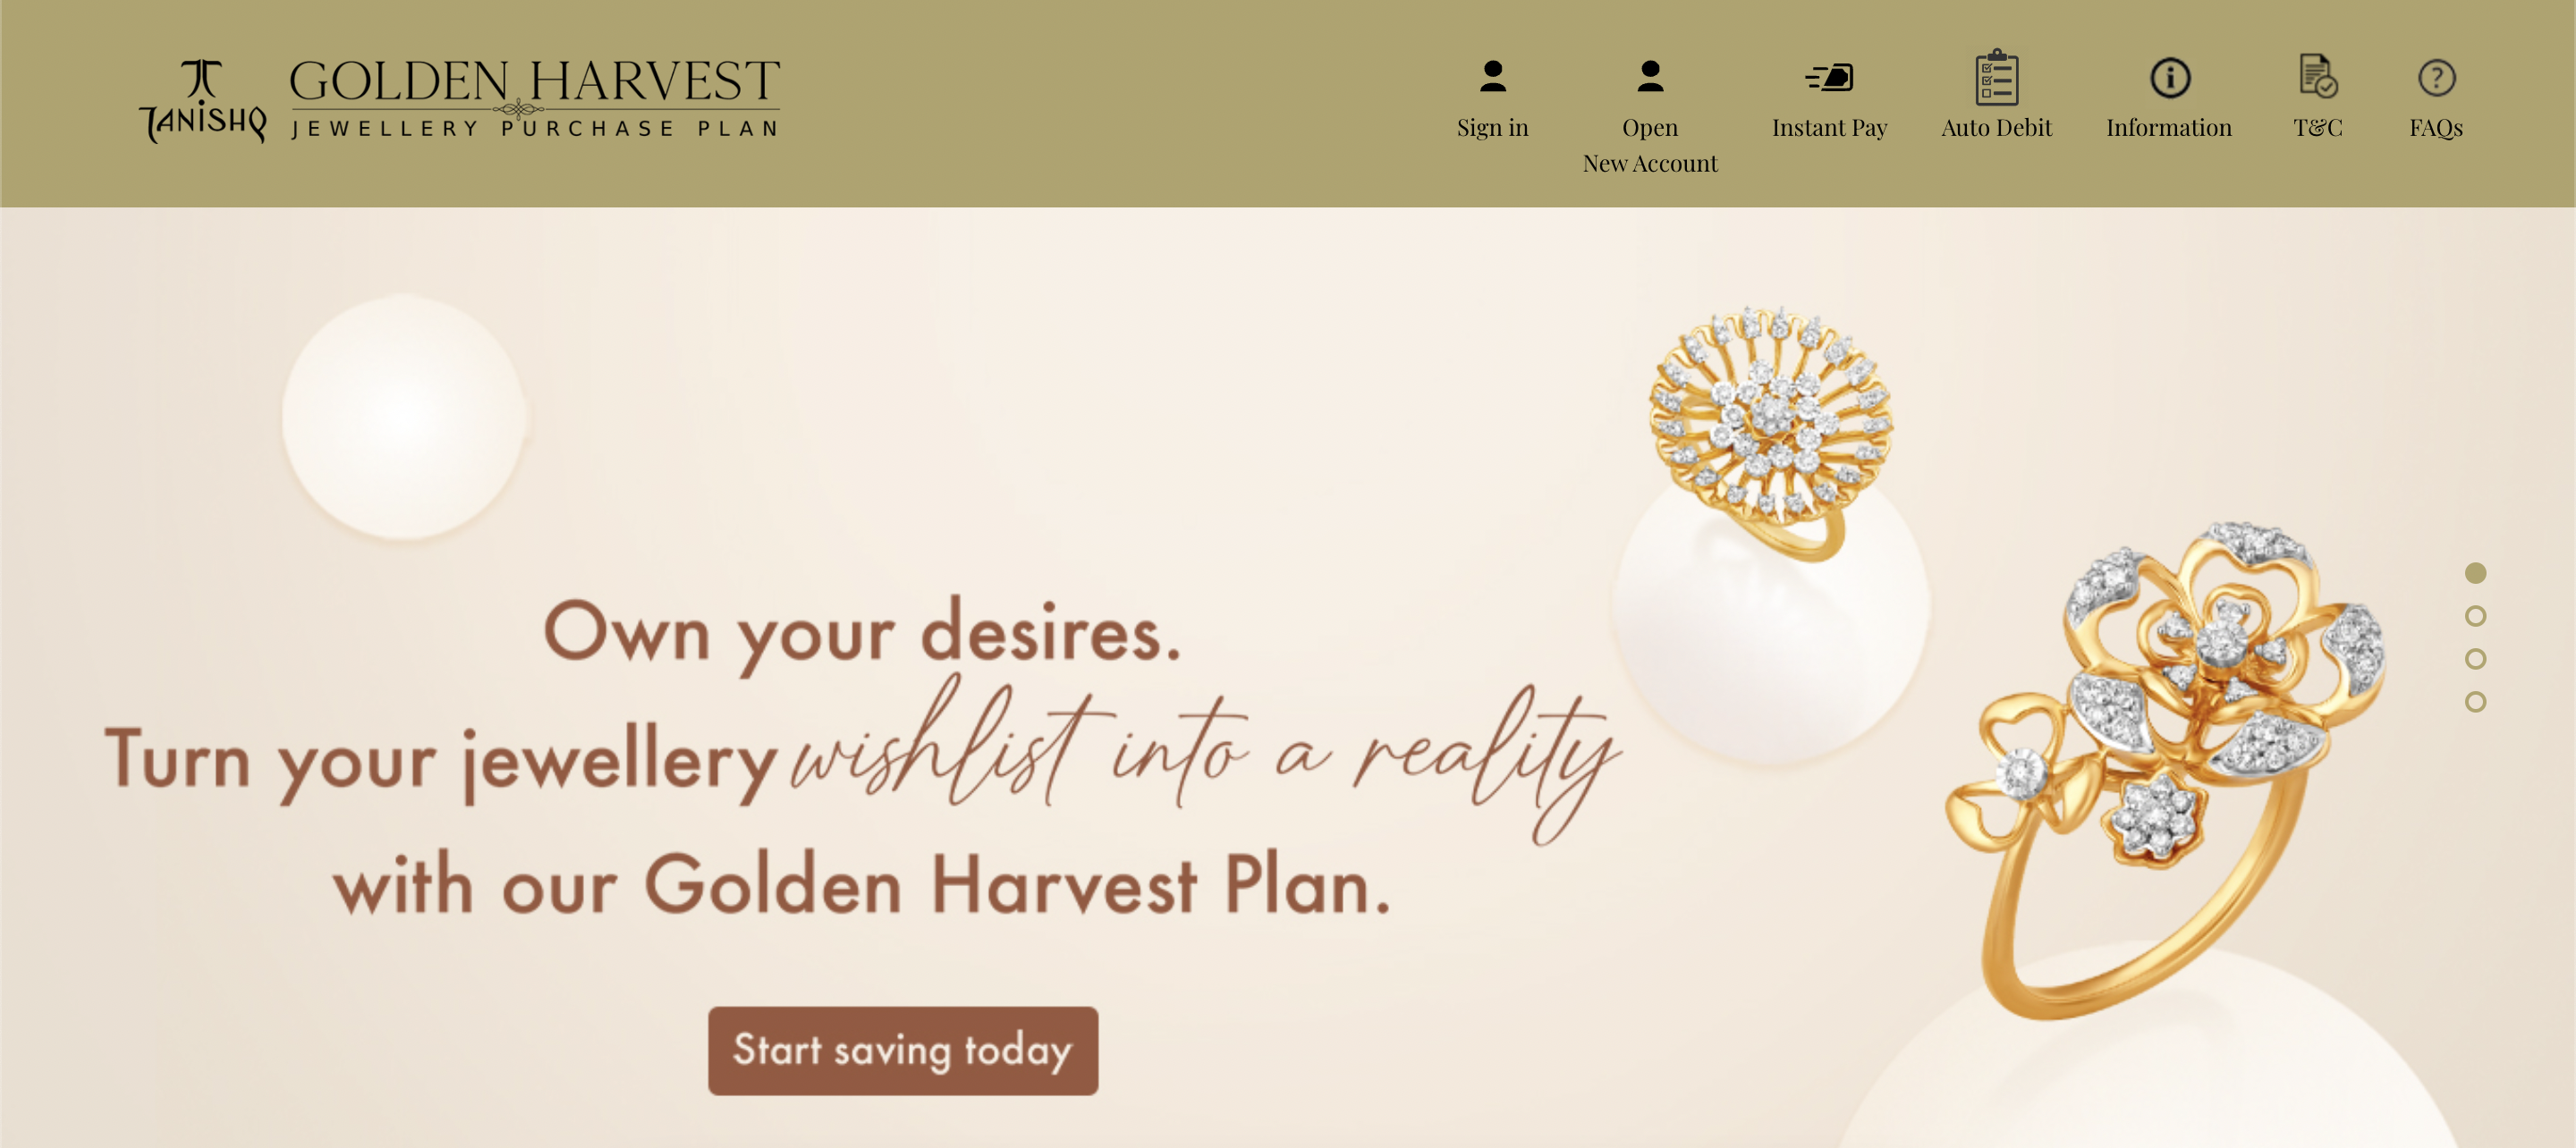 screenshot of Tanishq Golden Harvest webpage